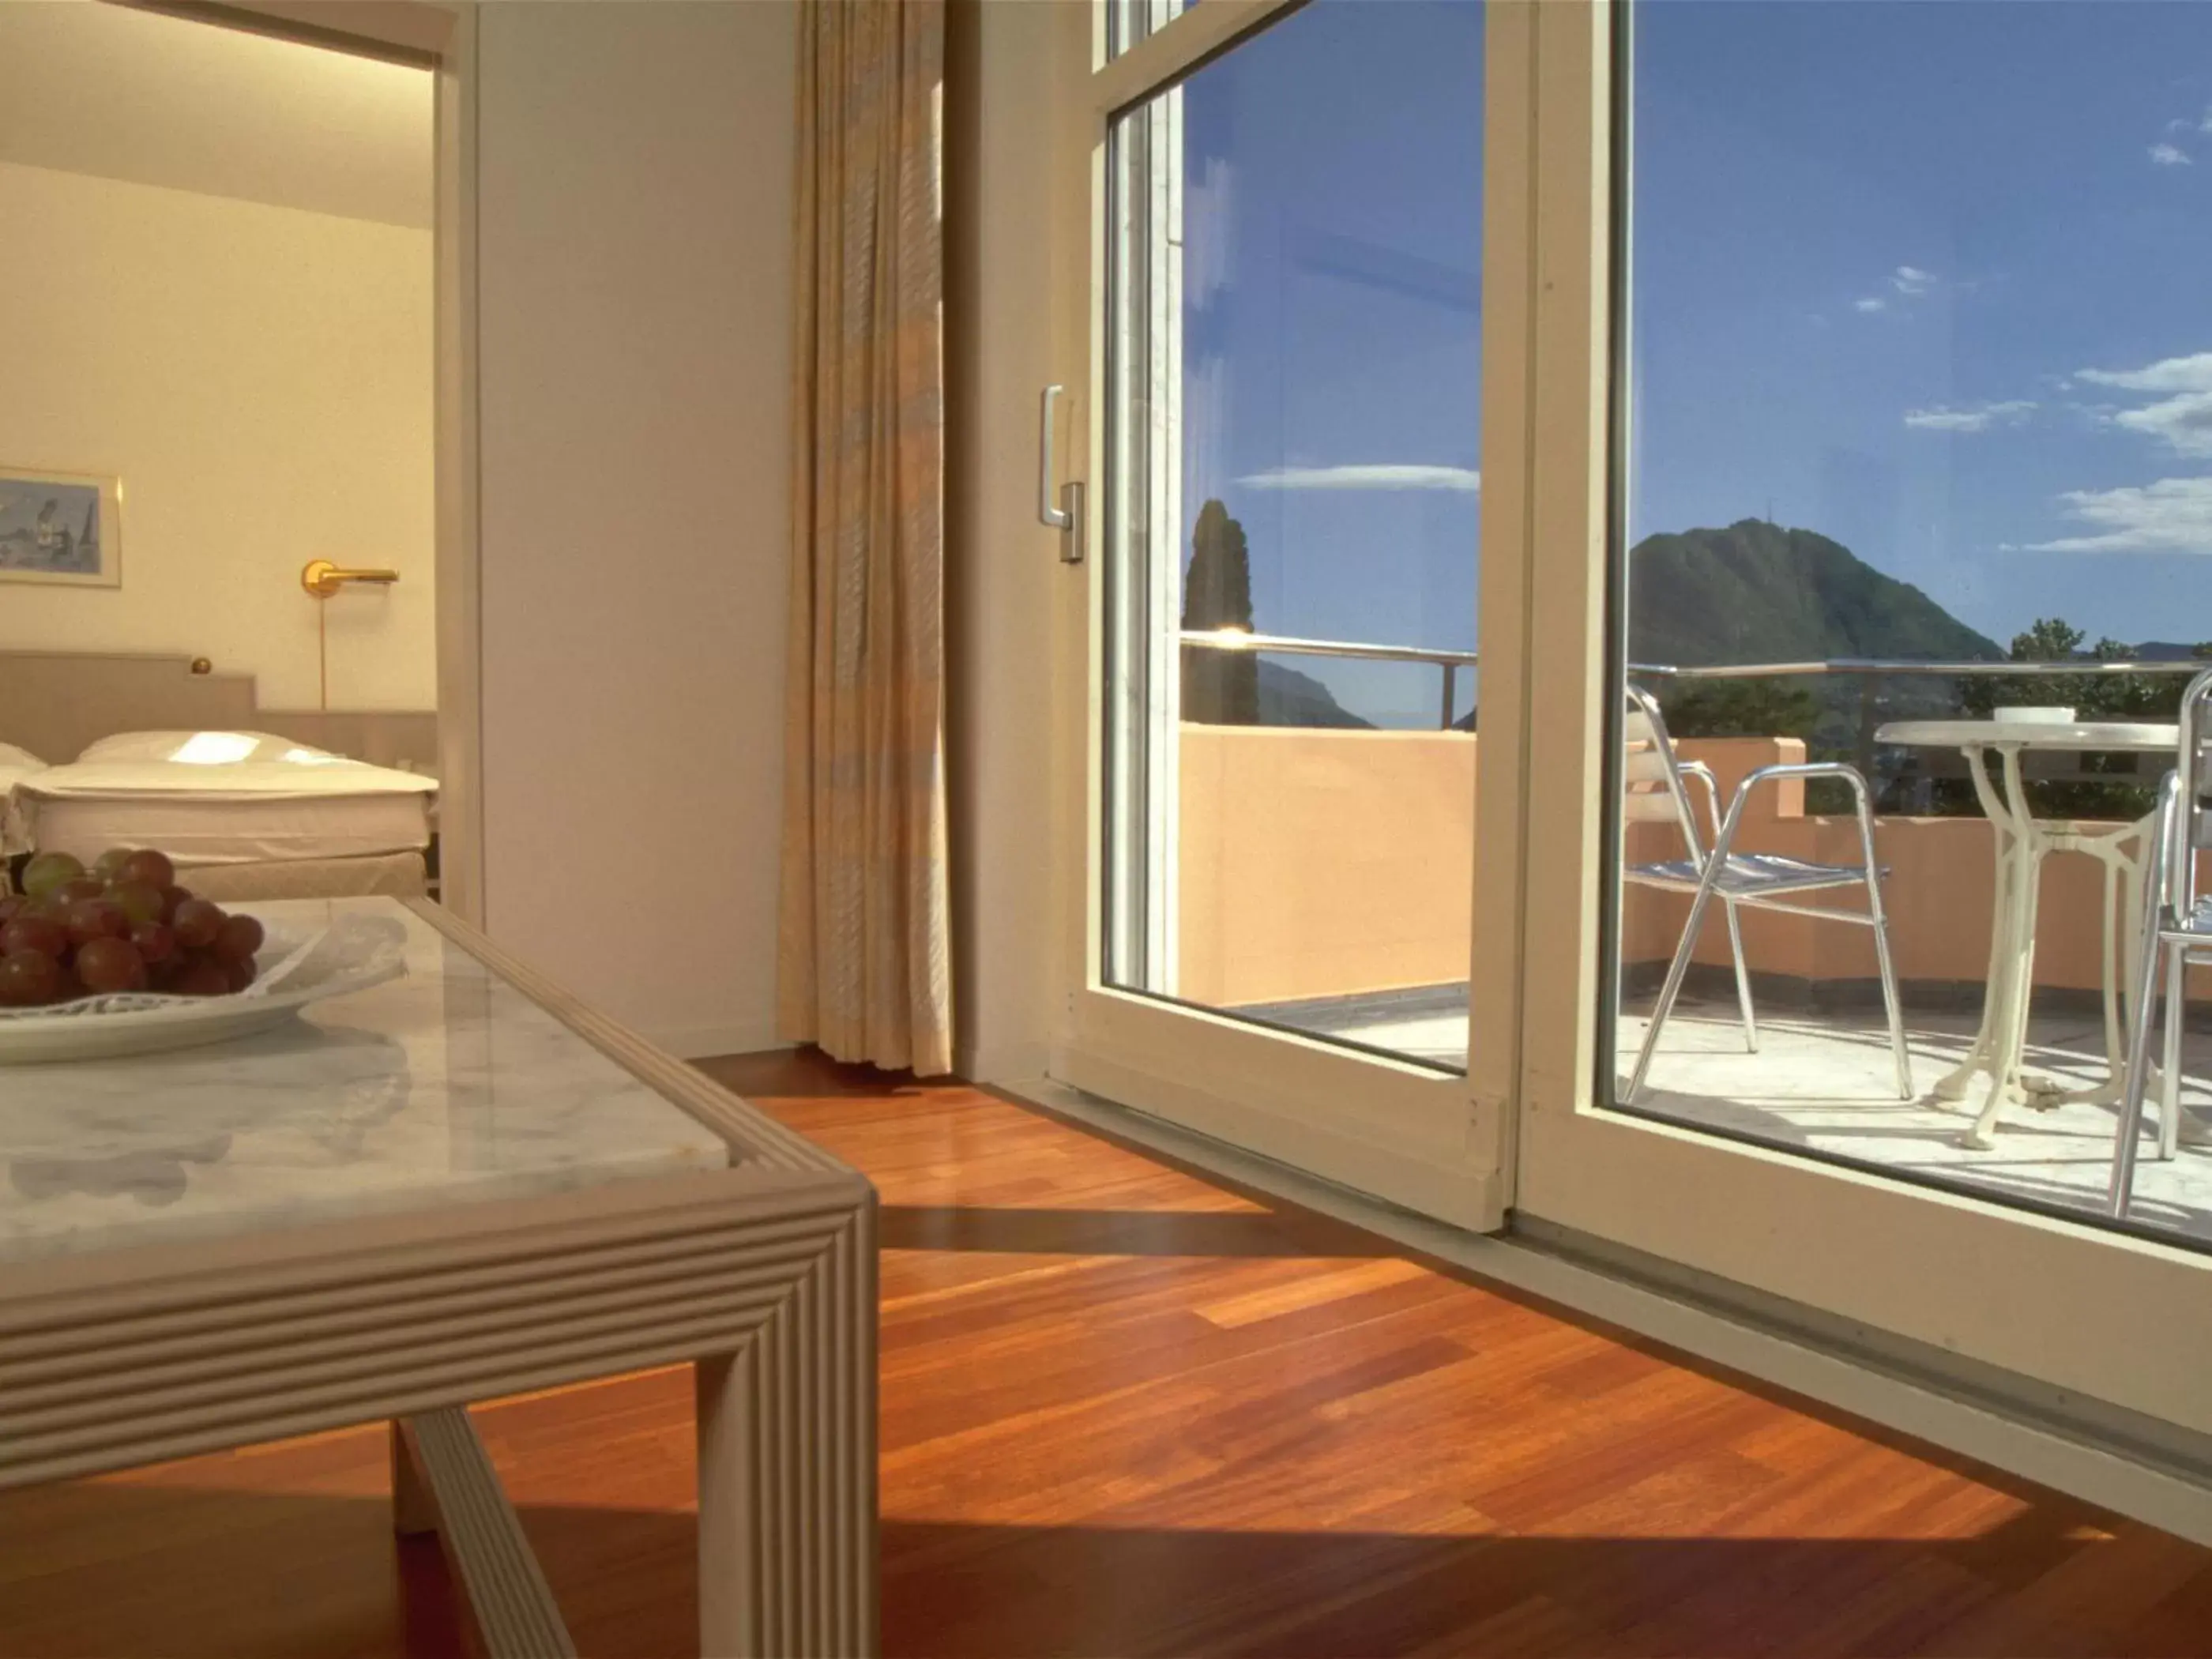 Living room in Villa Sassa Hotel, Residence & Spa - Ticino Hotels Group